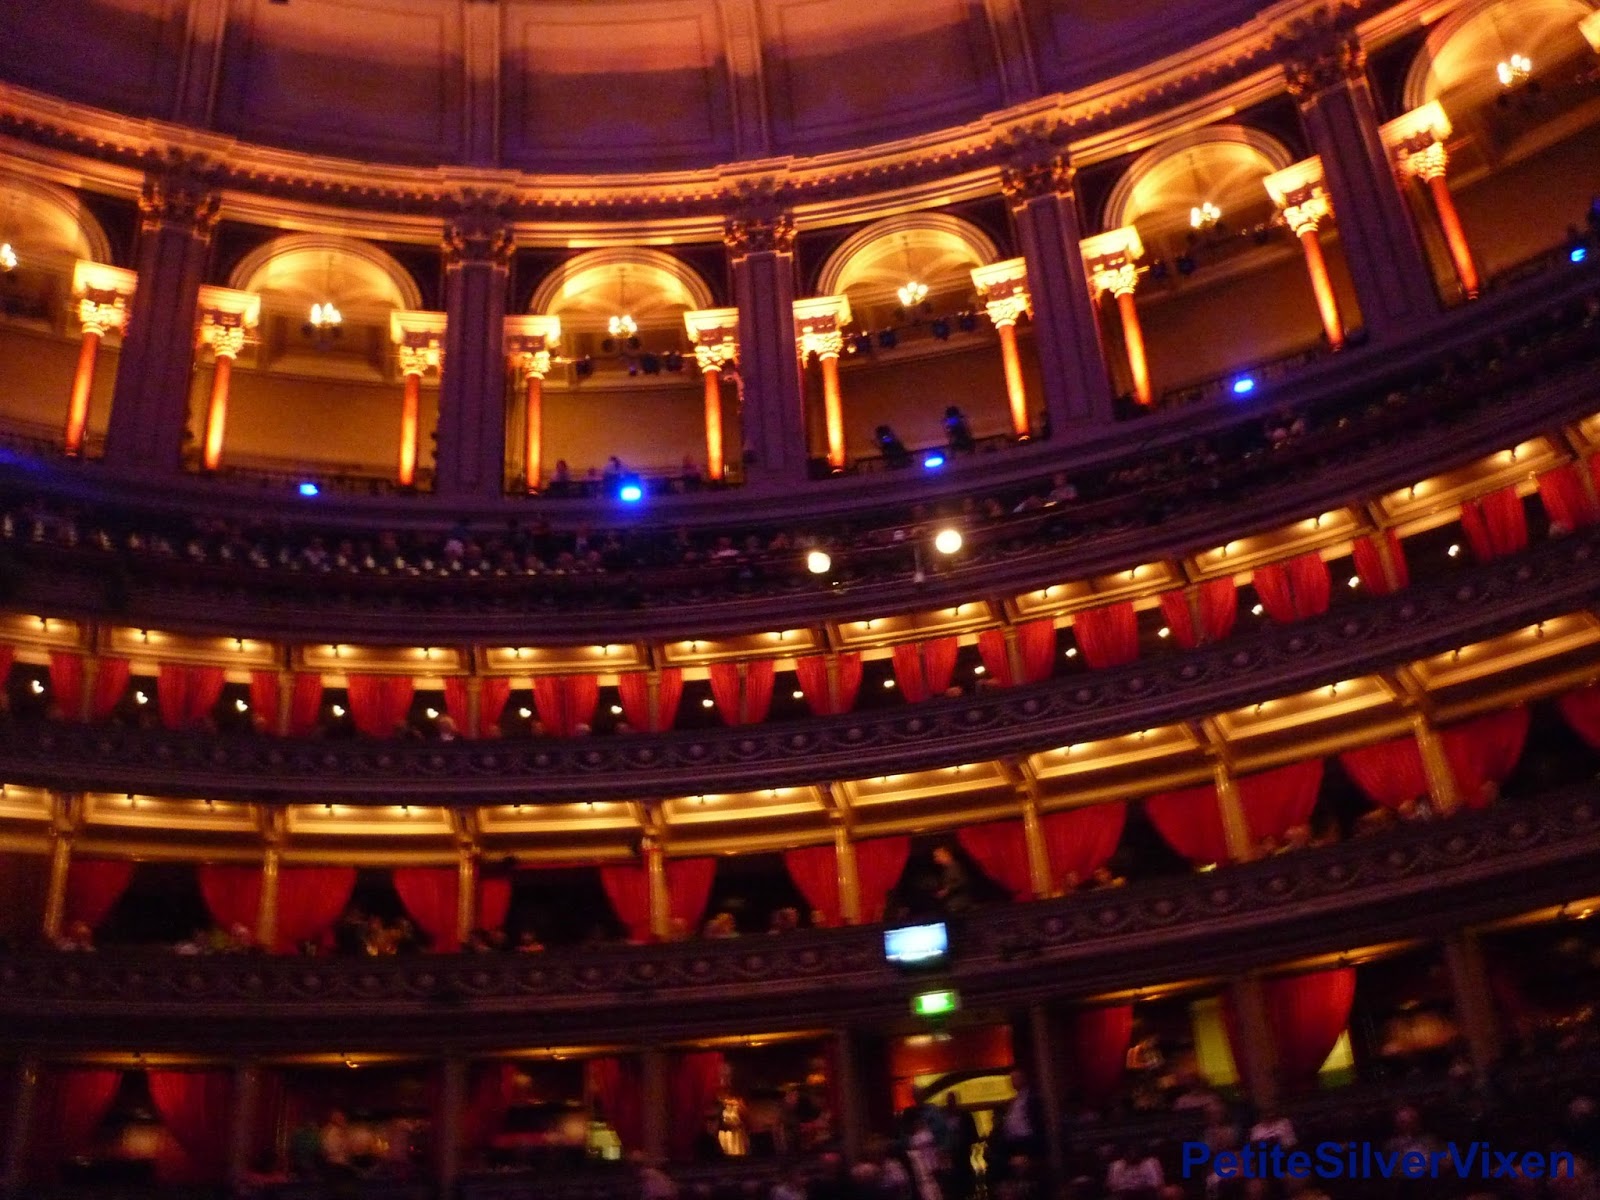 Royal Albert Hall Interior | PetiteSilverVixen